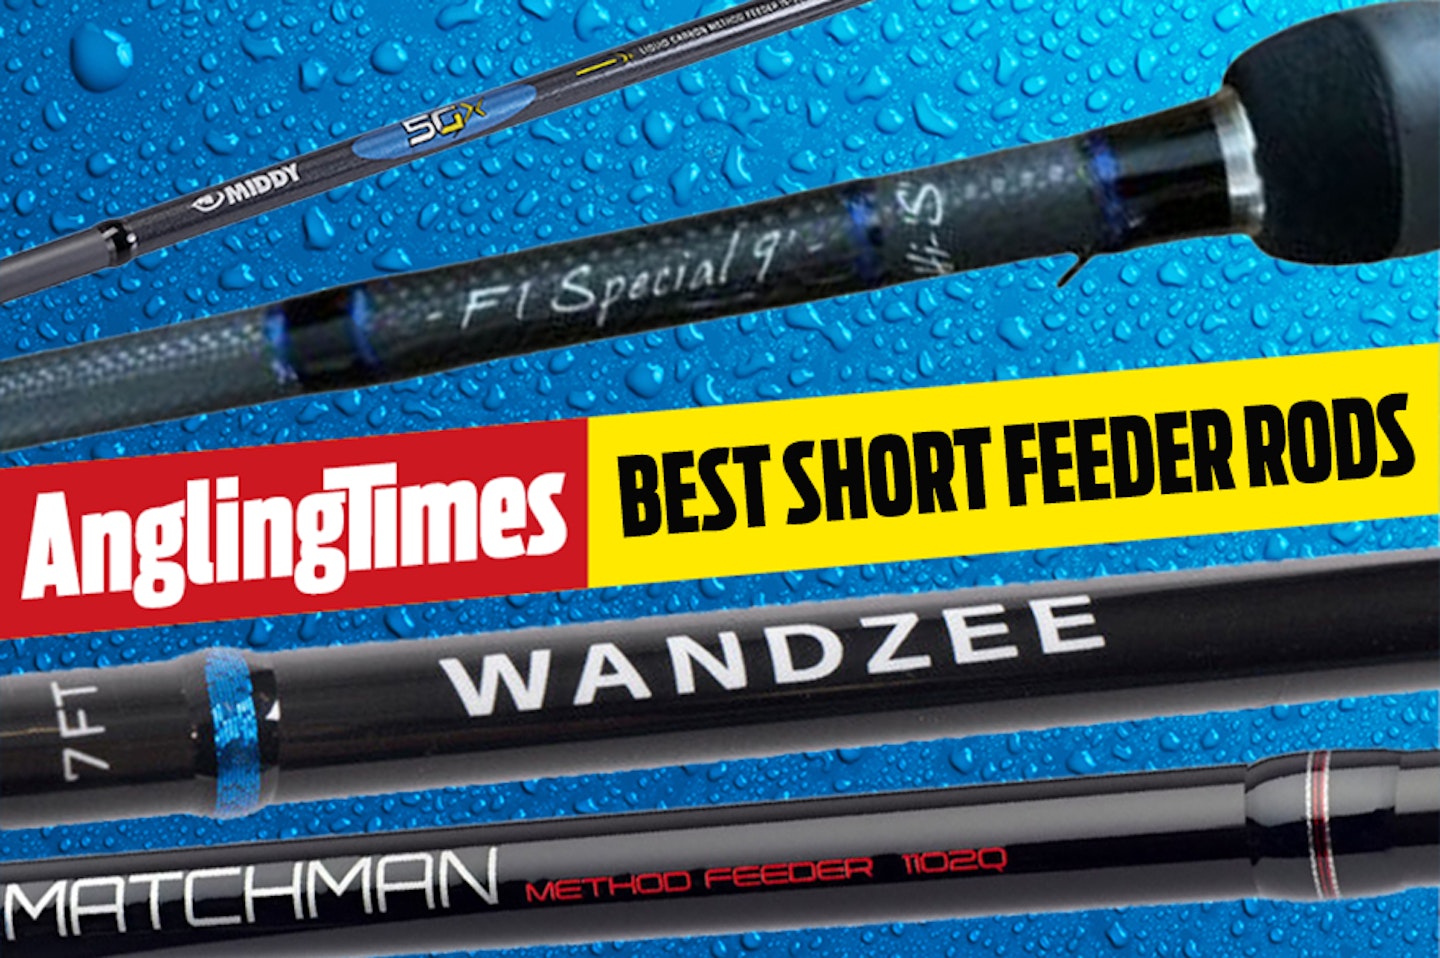 The best short feeder fishing rods